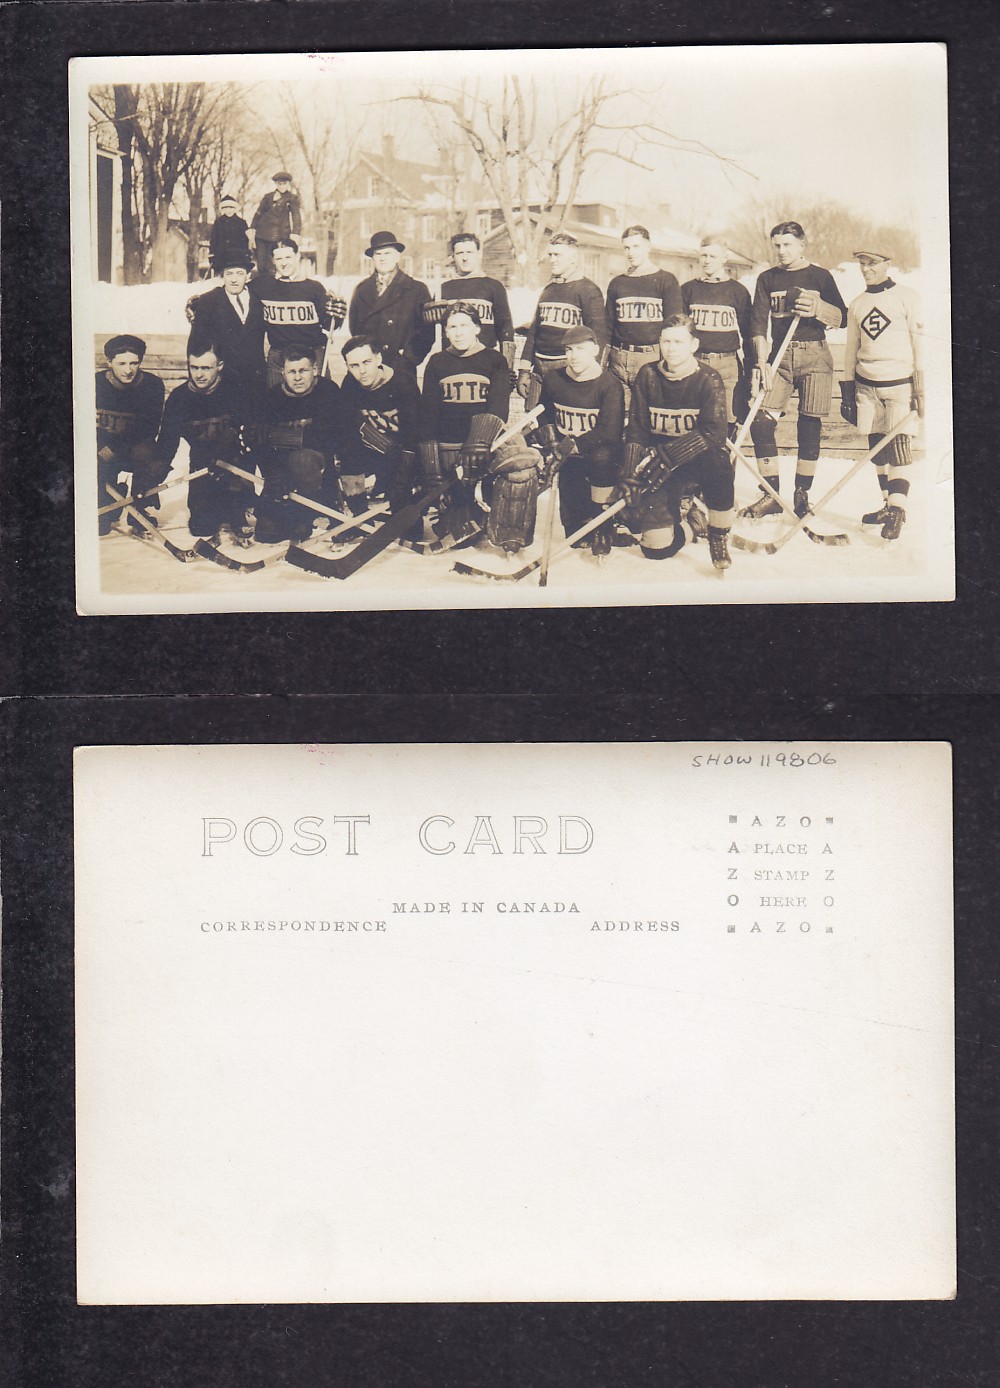 1920'S SUTTON HOCKEY TEAM POST CARD photo